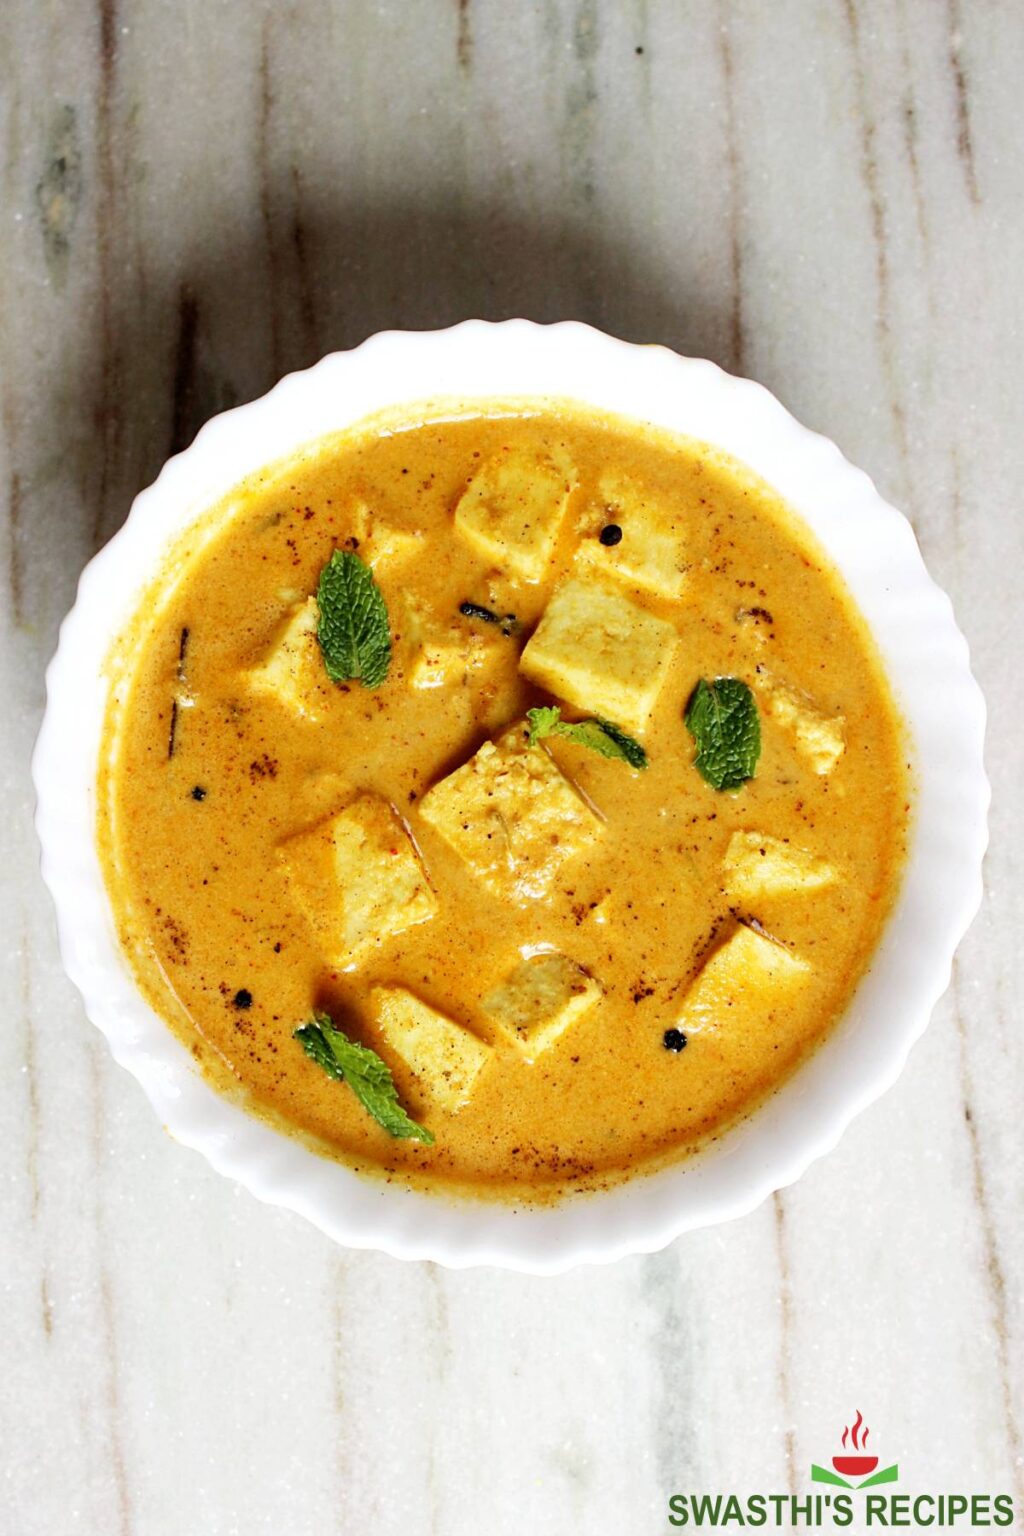 Shahi paneer recipe - Swasthi's Recipes